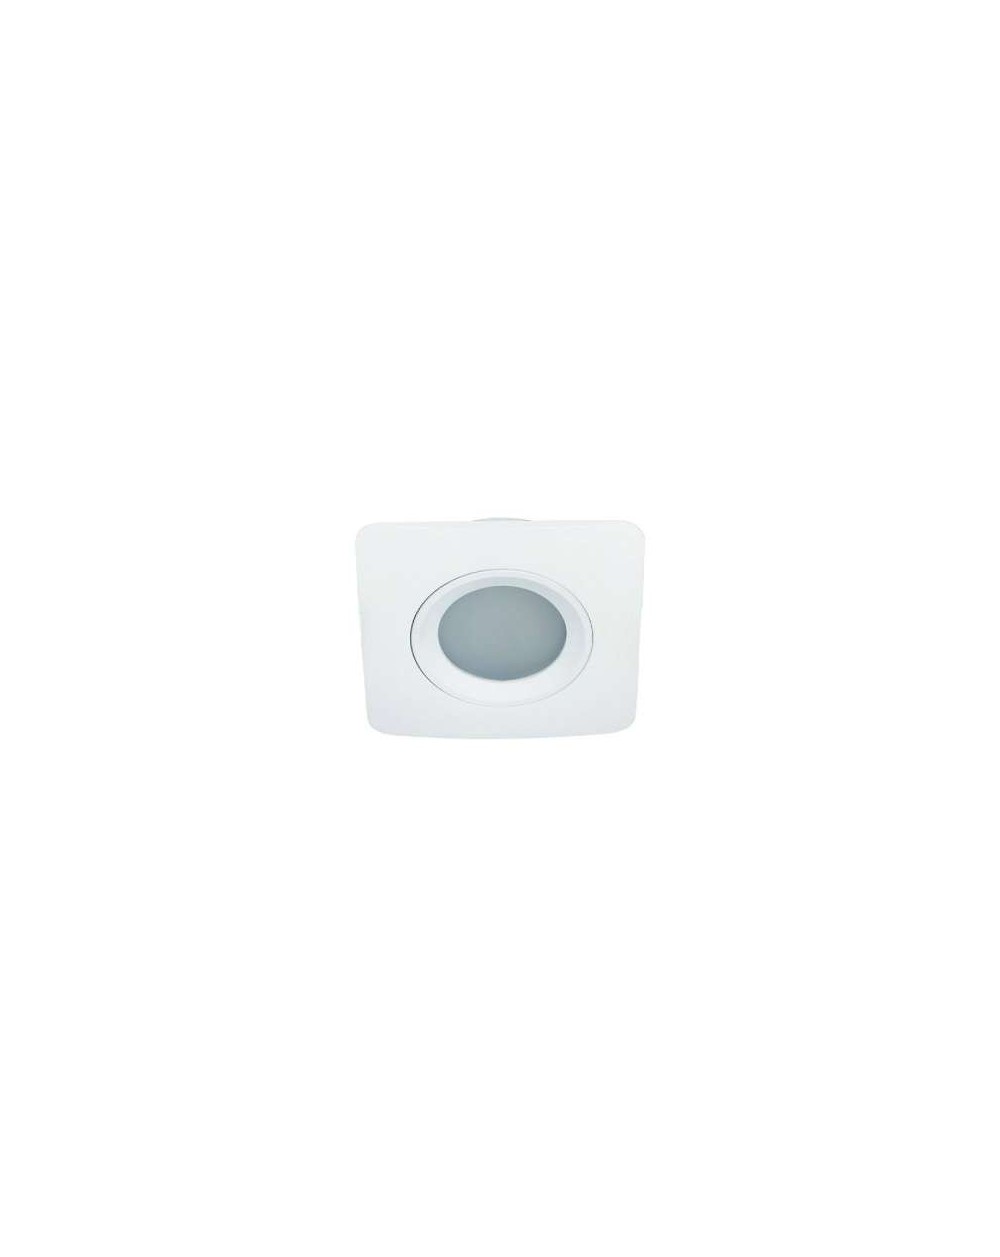 Wpuszczana / lampa sufitowa BELLO Bianco IP44 GU10 - Orlicki oprawa kwadratowa